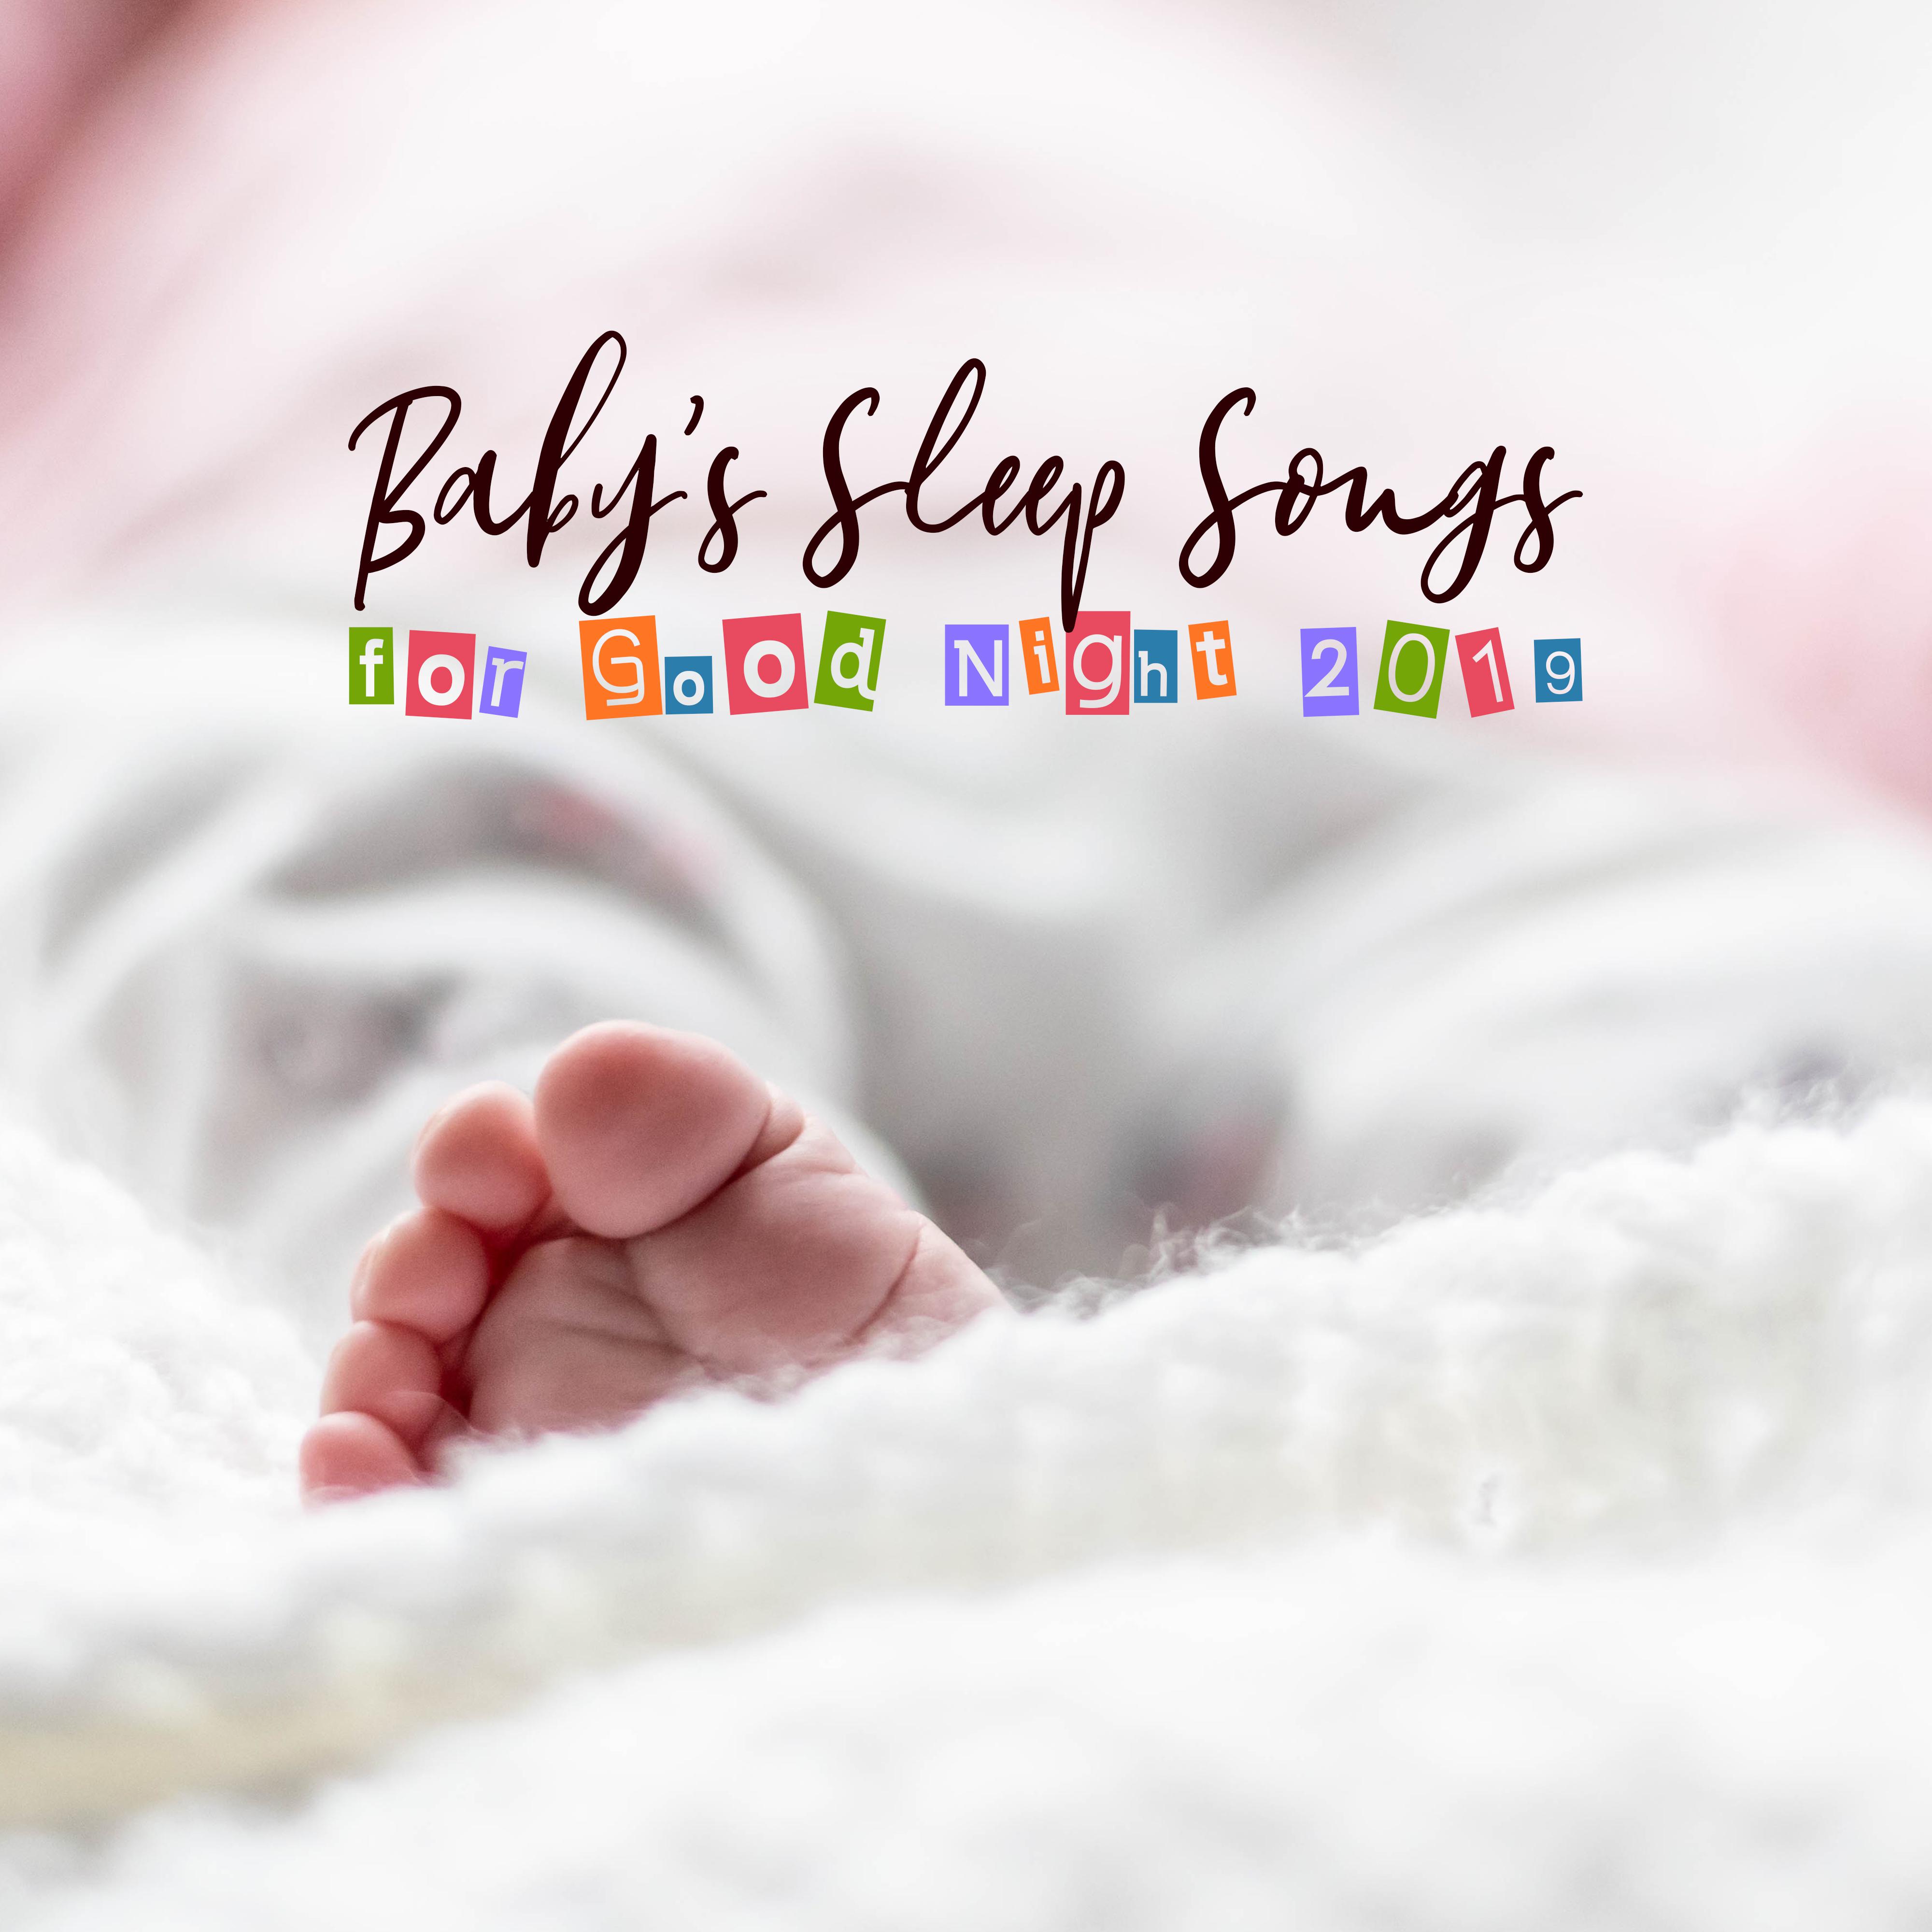 Baby' s Sleep Songs for Good Night 2019